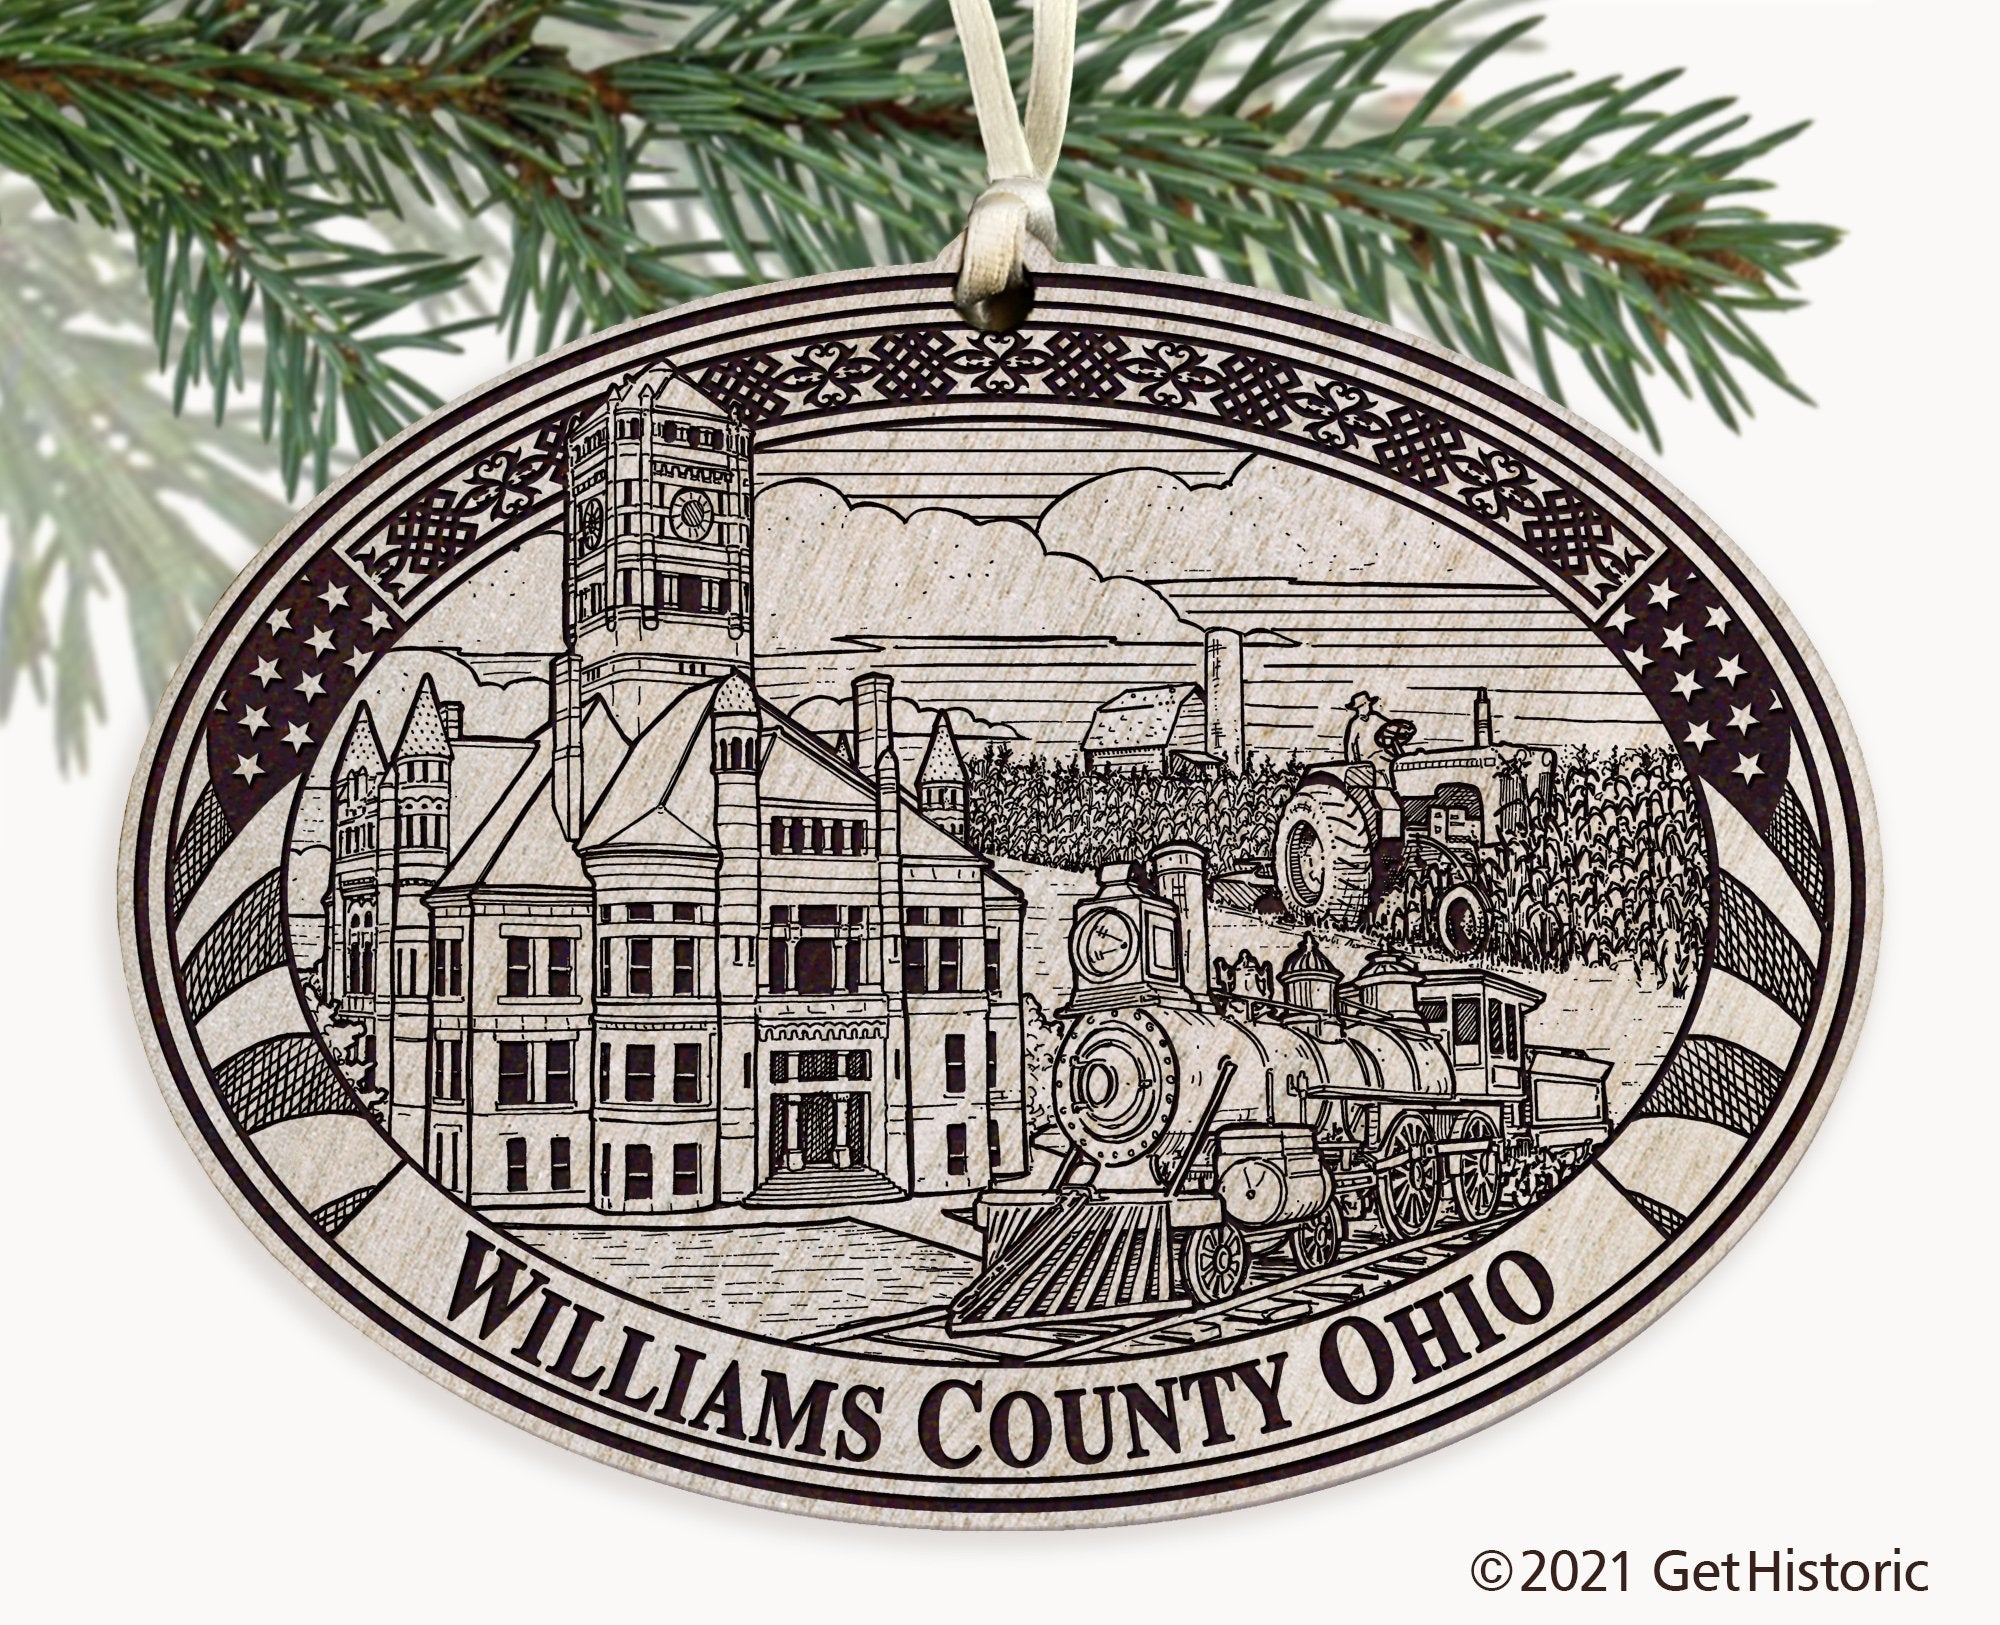 Williams County Ohio Engraved Ornament